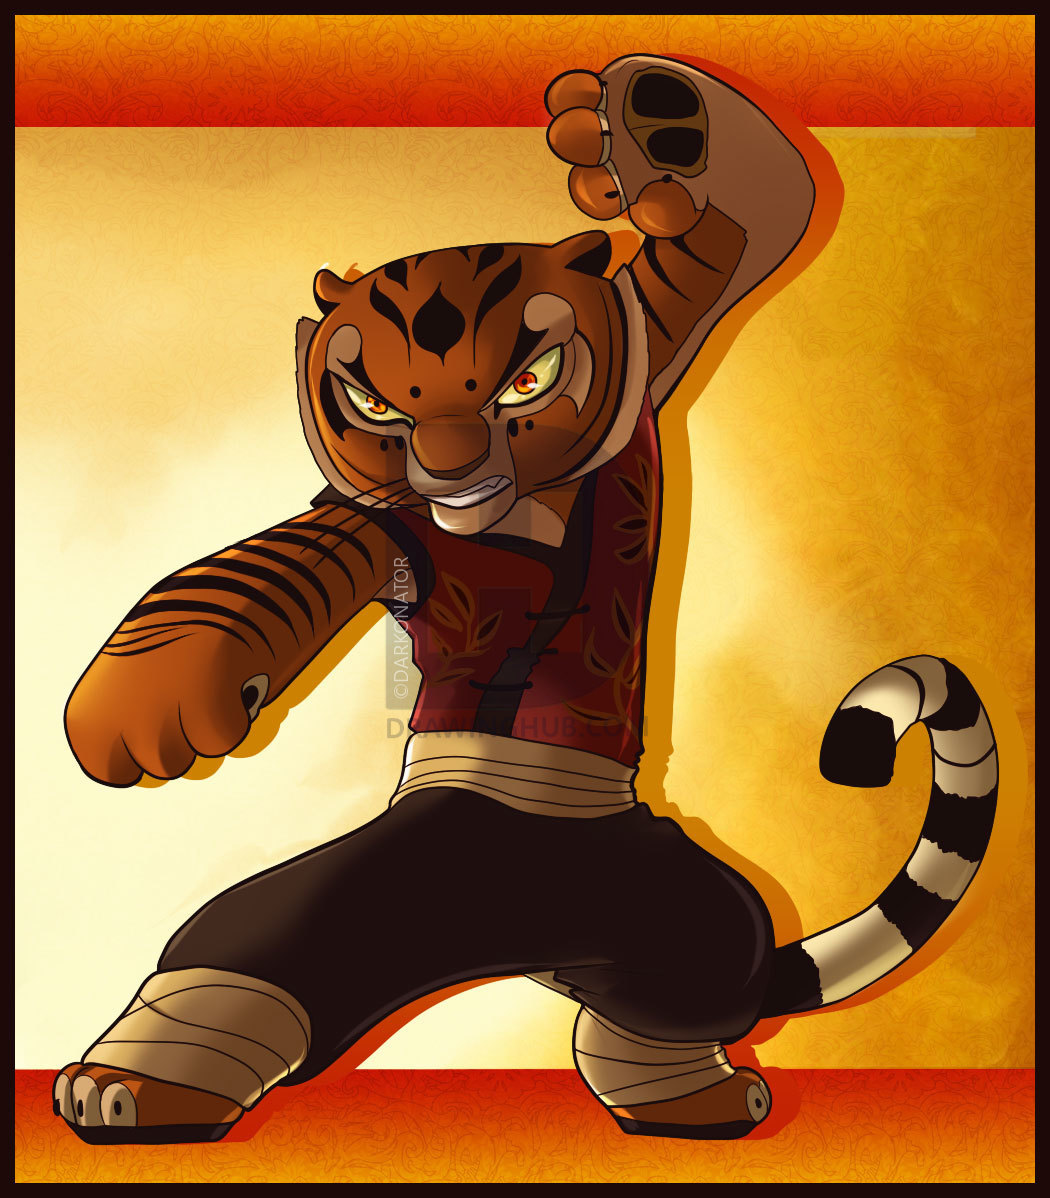 Dakimakura master tigress. Мастер тигрица. Тигрица из кунг фу Панда. Мастер тигрица Vore. Картинки мастера тигрицы.